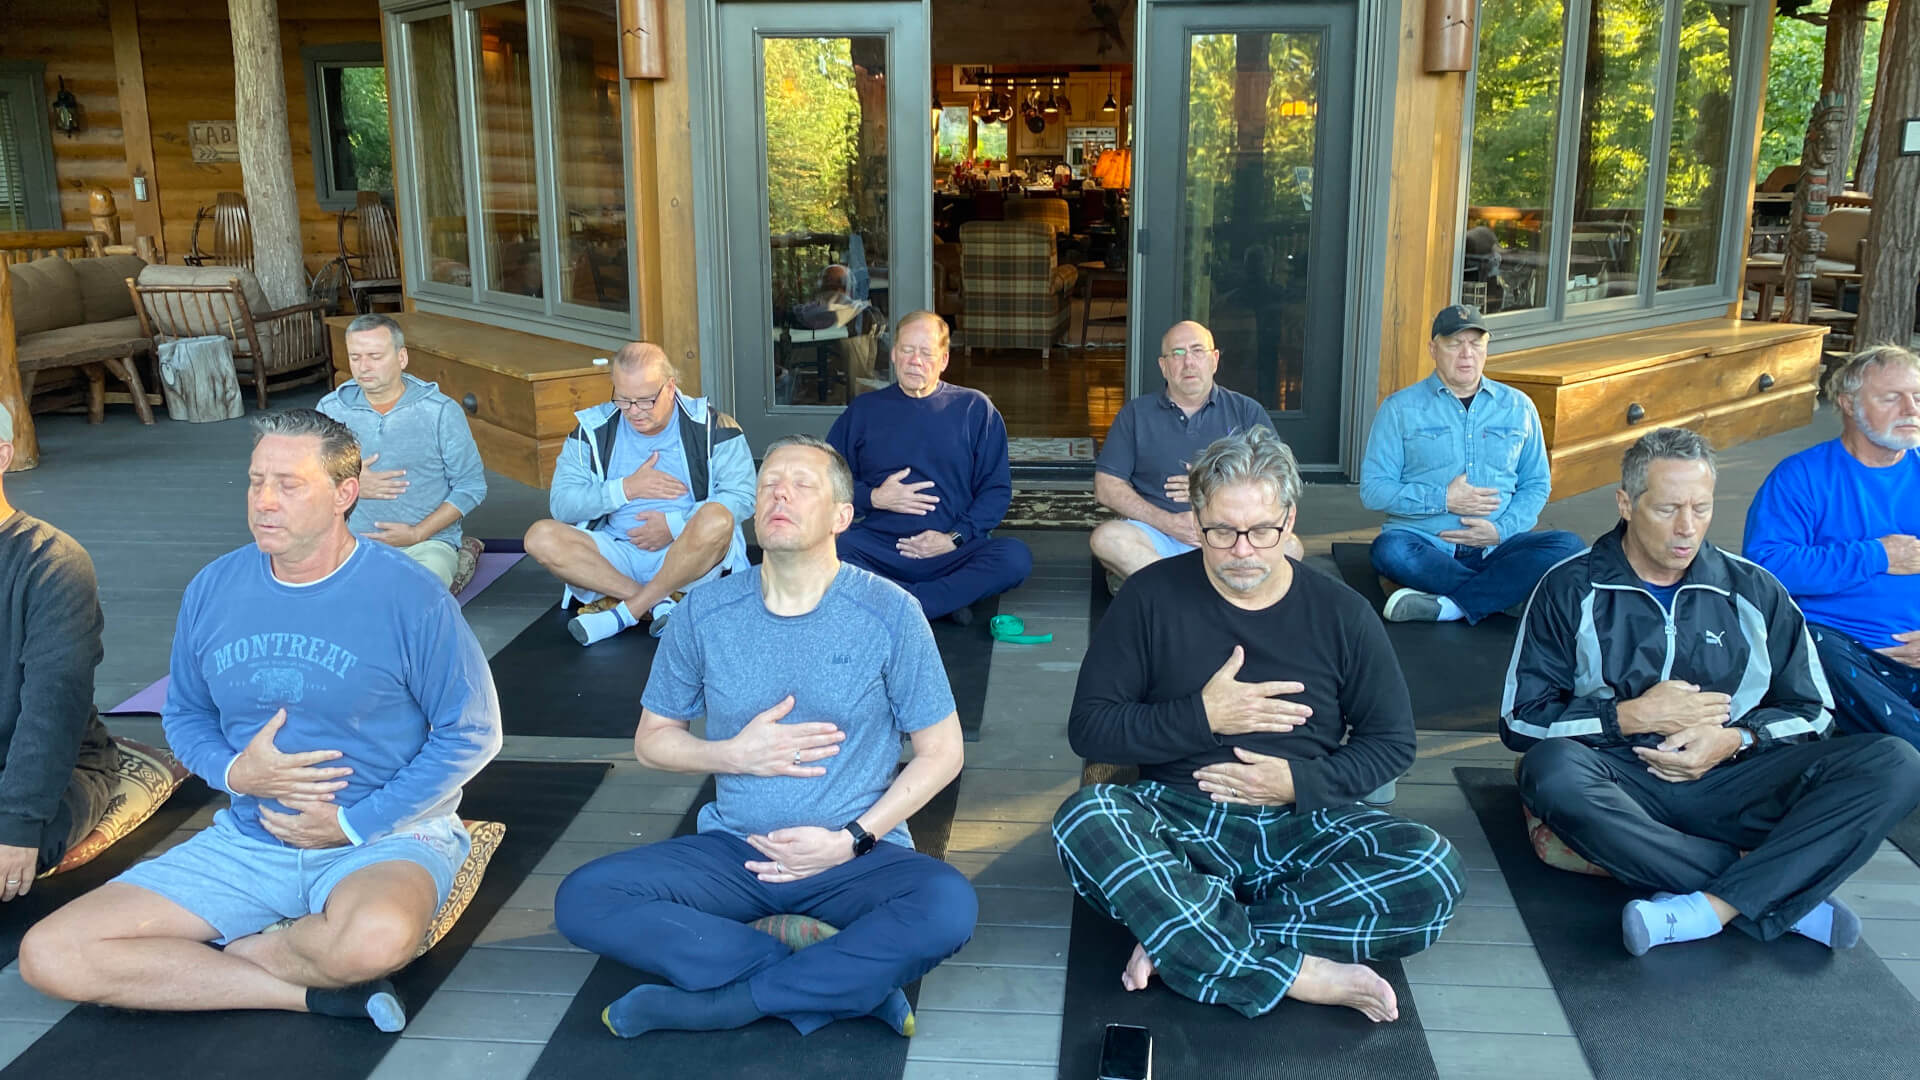 Private yoga class for men at retreat center near Asheville, nC.